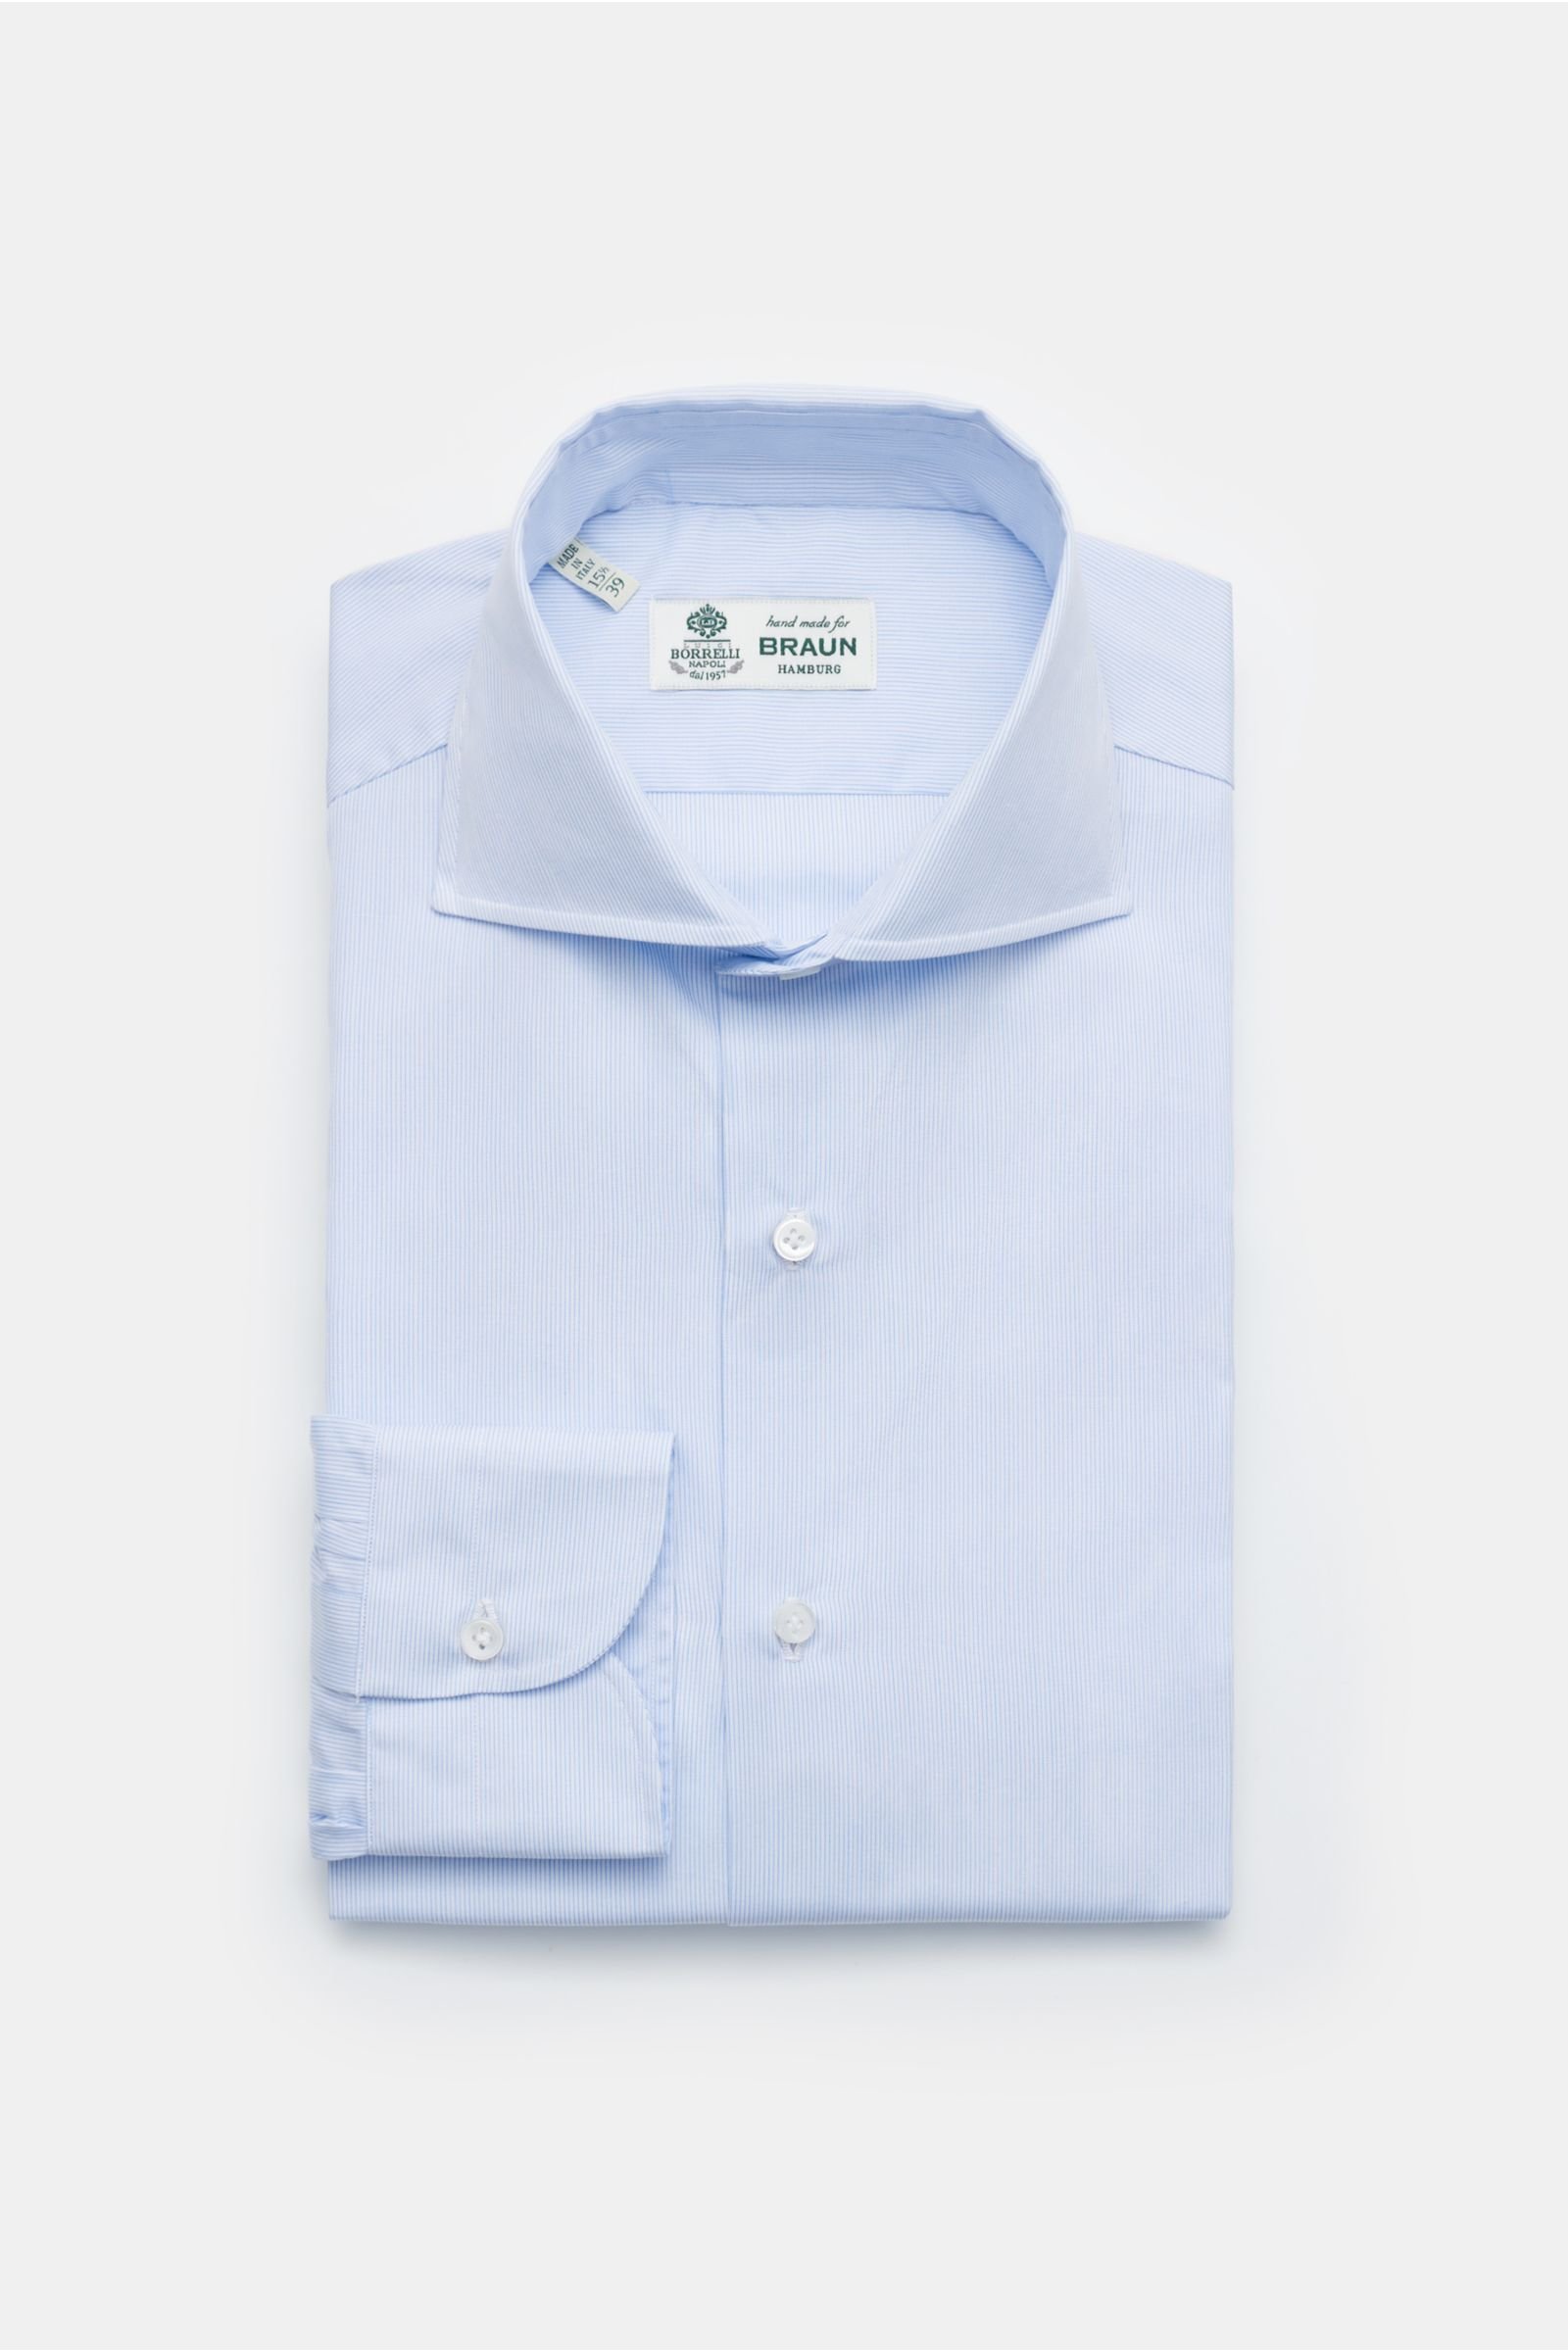 Business shirt 'Nando' shark collar light blue/white striped